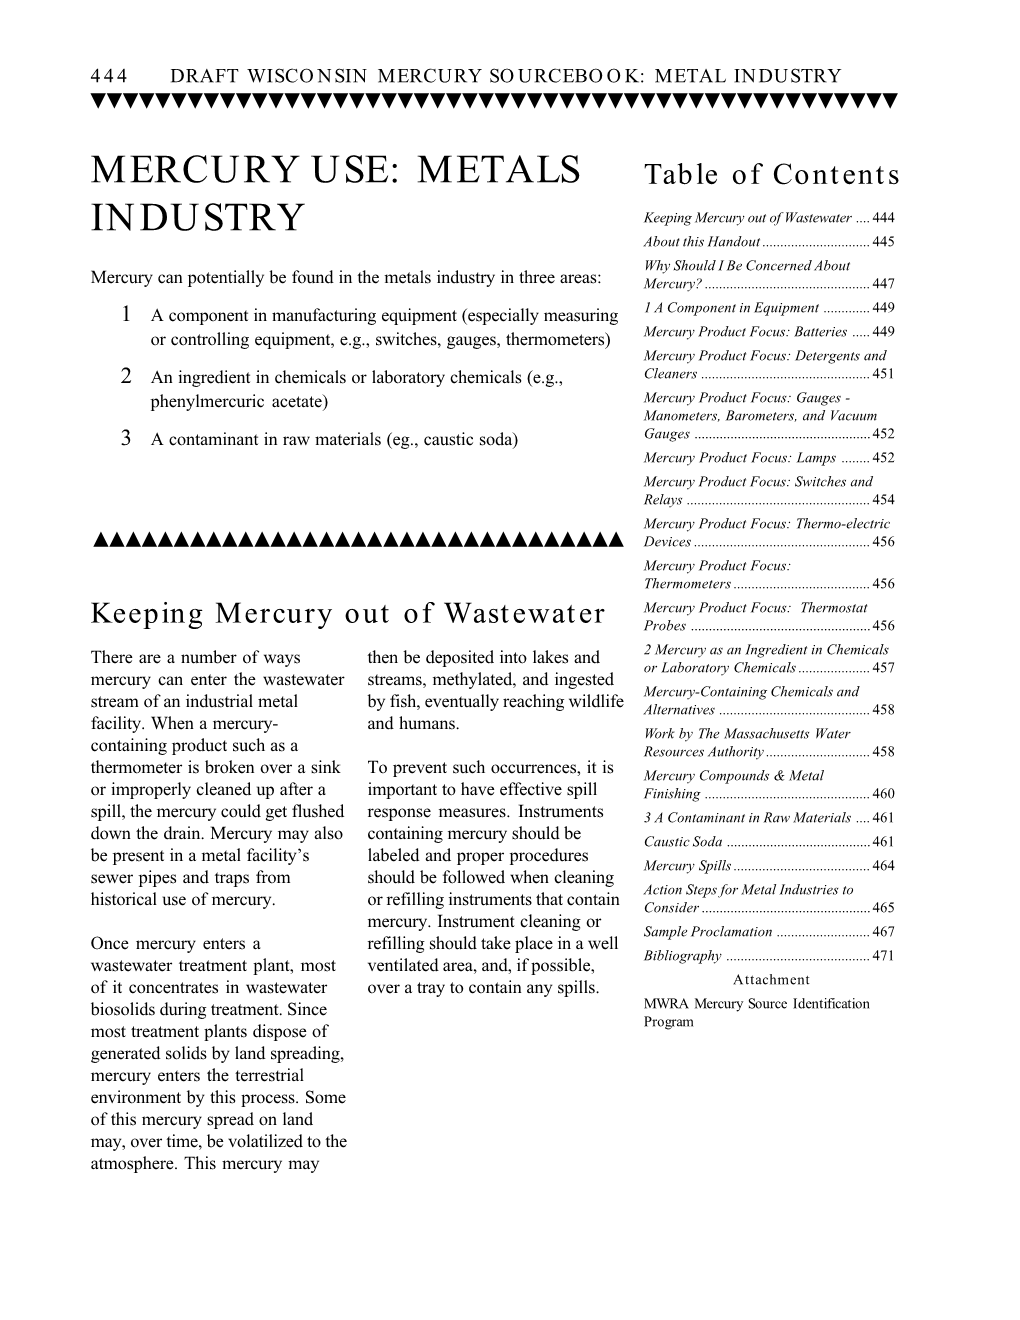 Mercury Use: Metals Industry